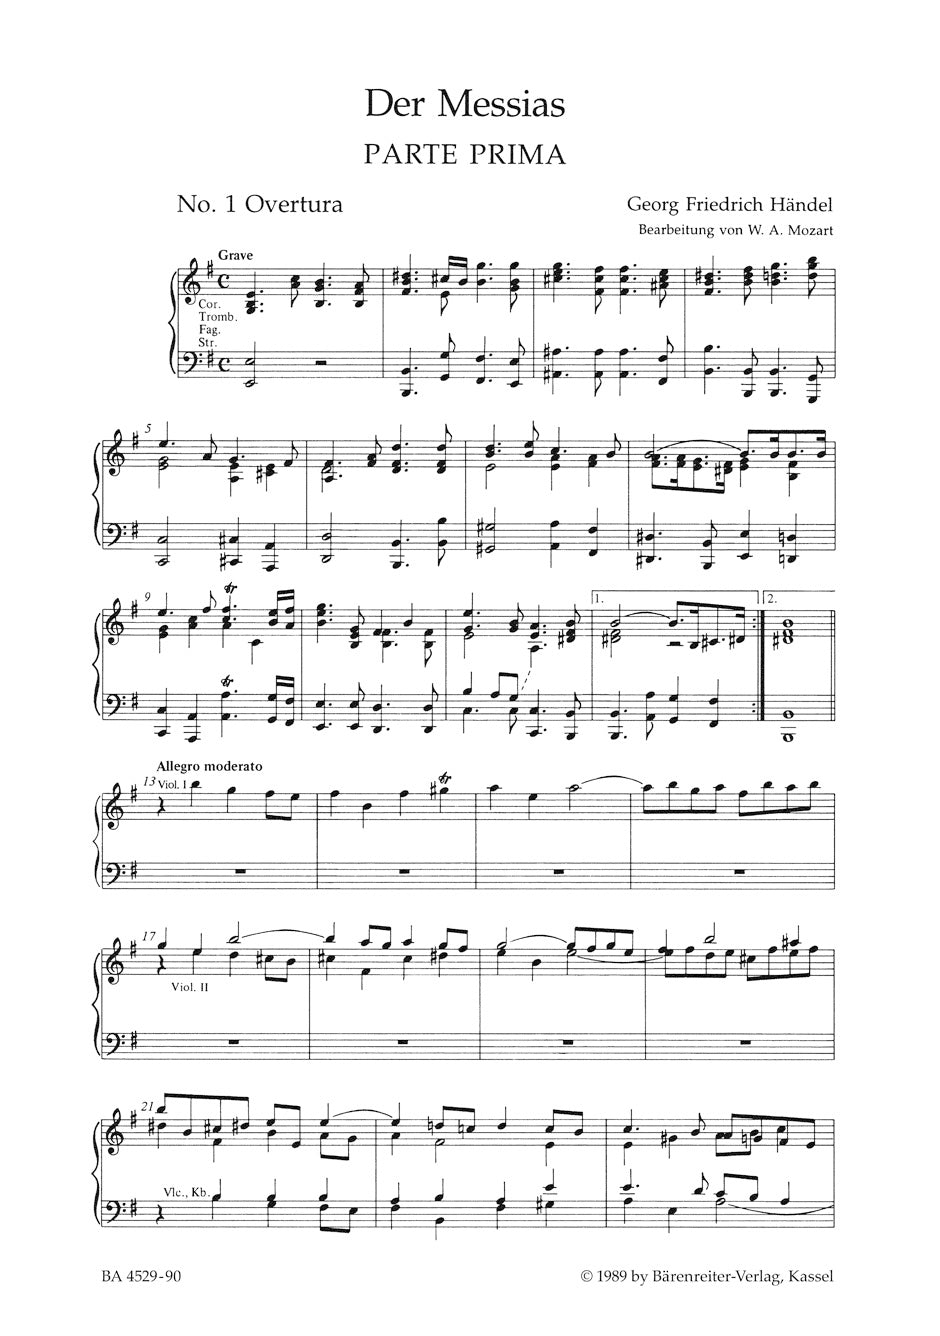 Handel/Mozart The Messiah K. 572 -Oratorio in three parts in the arrangement of Wolfgang Amadeus Mozart-